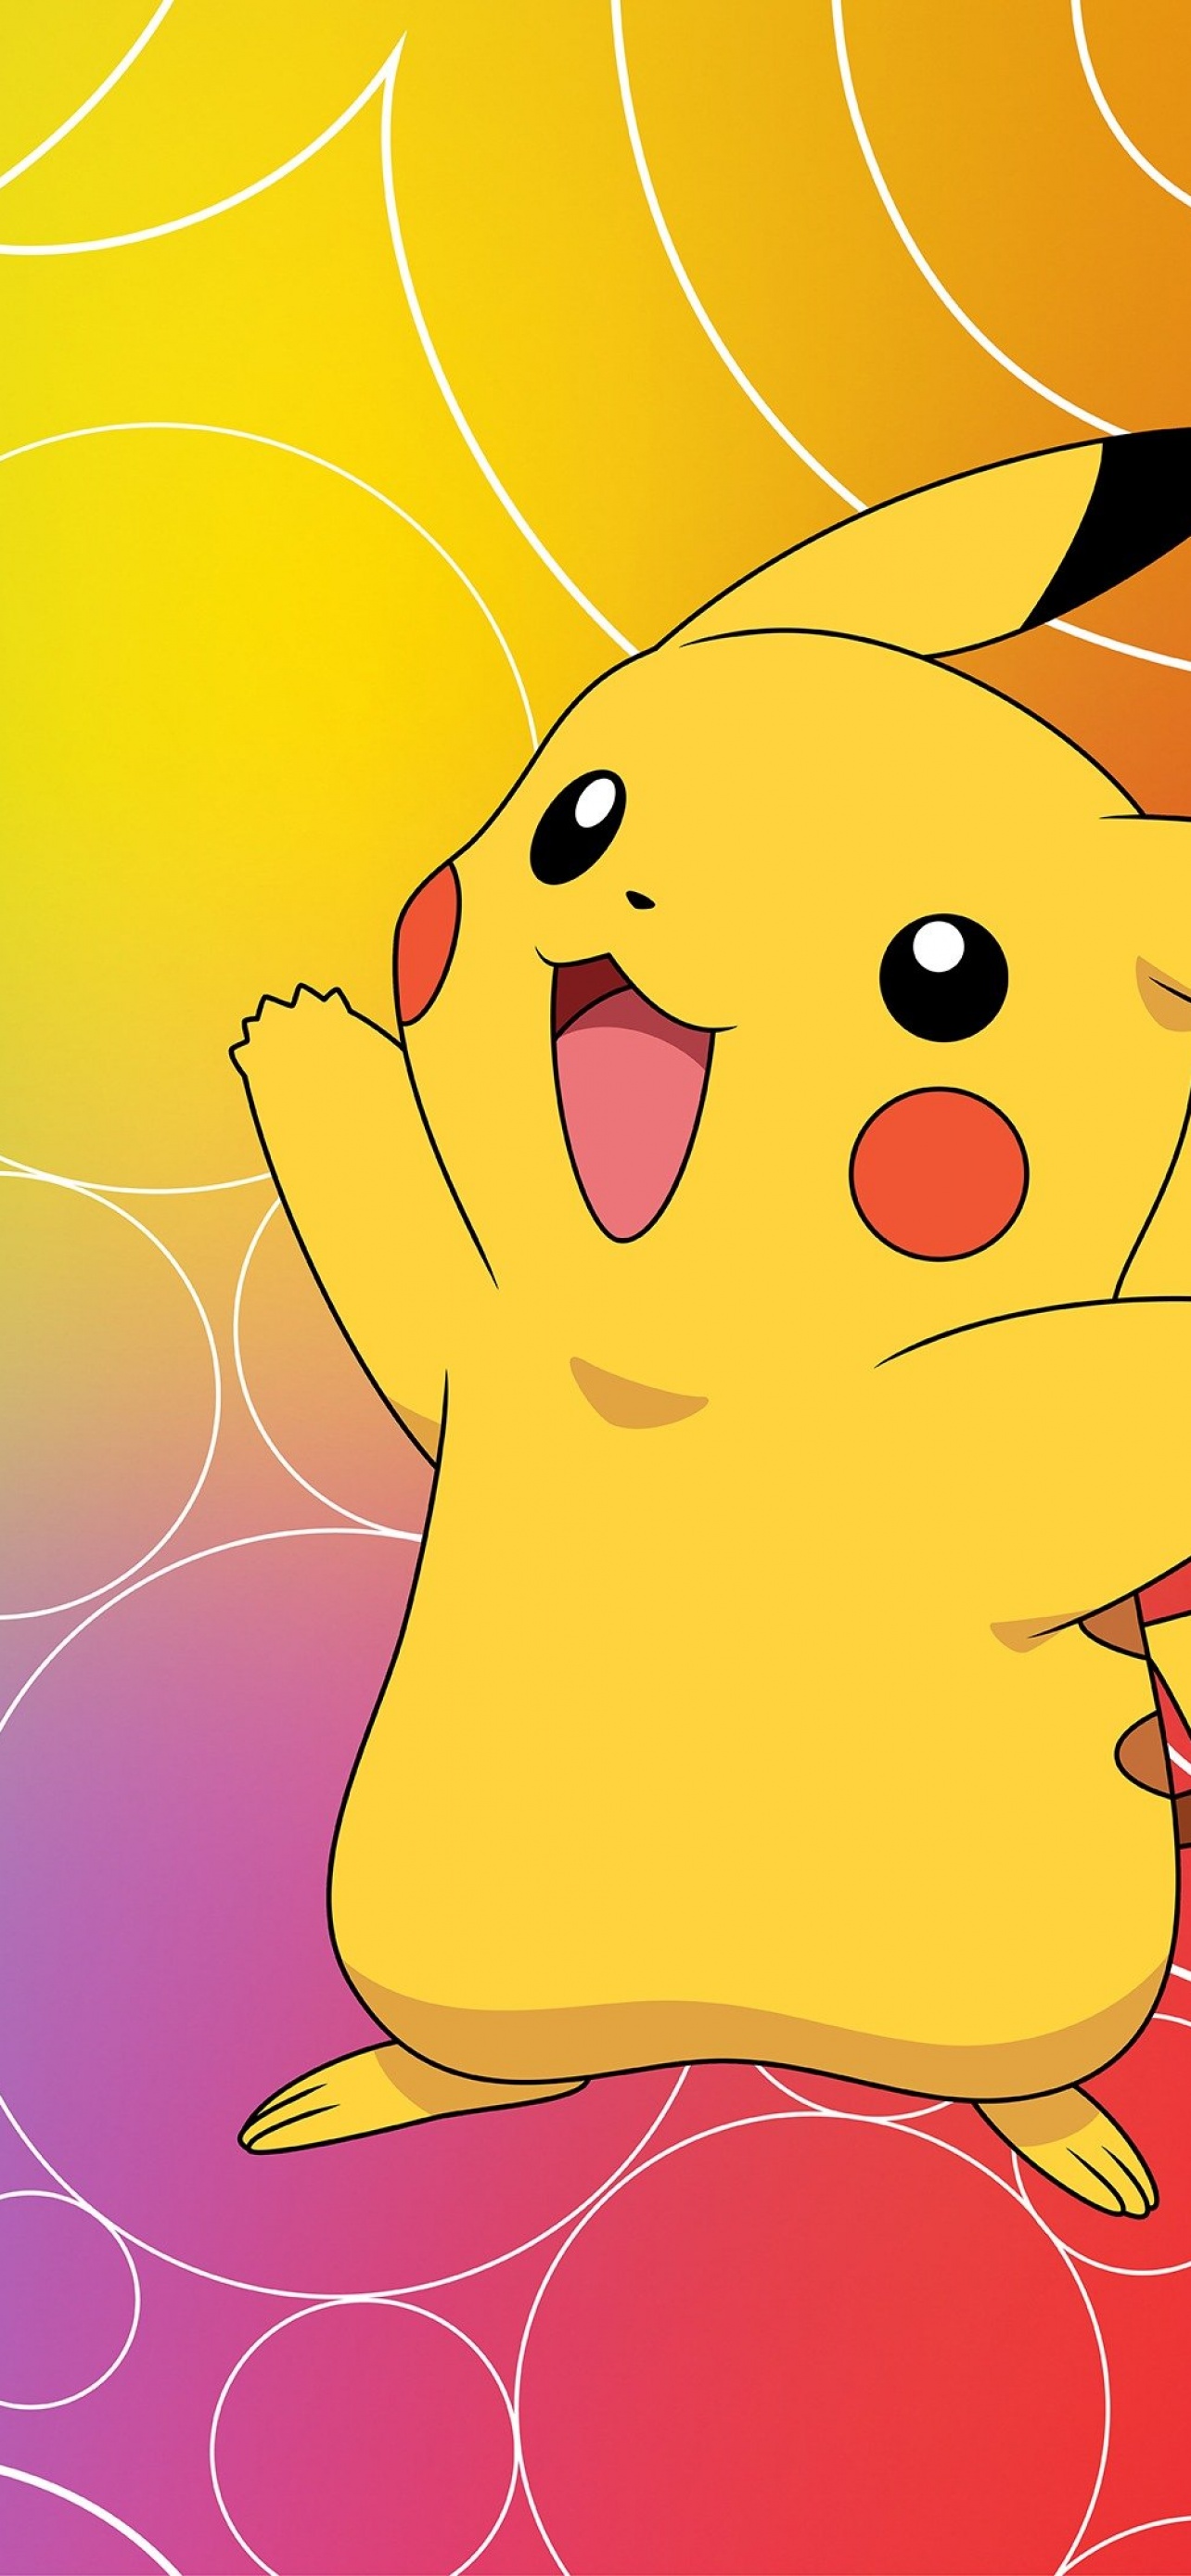 Pokemon Wallpaper Pikachu 72 images